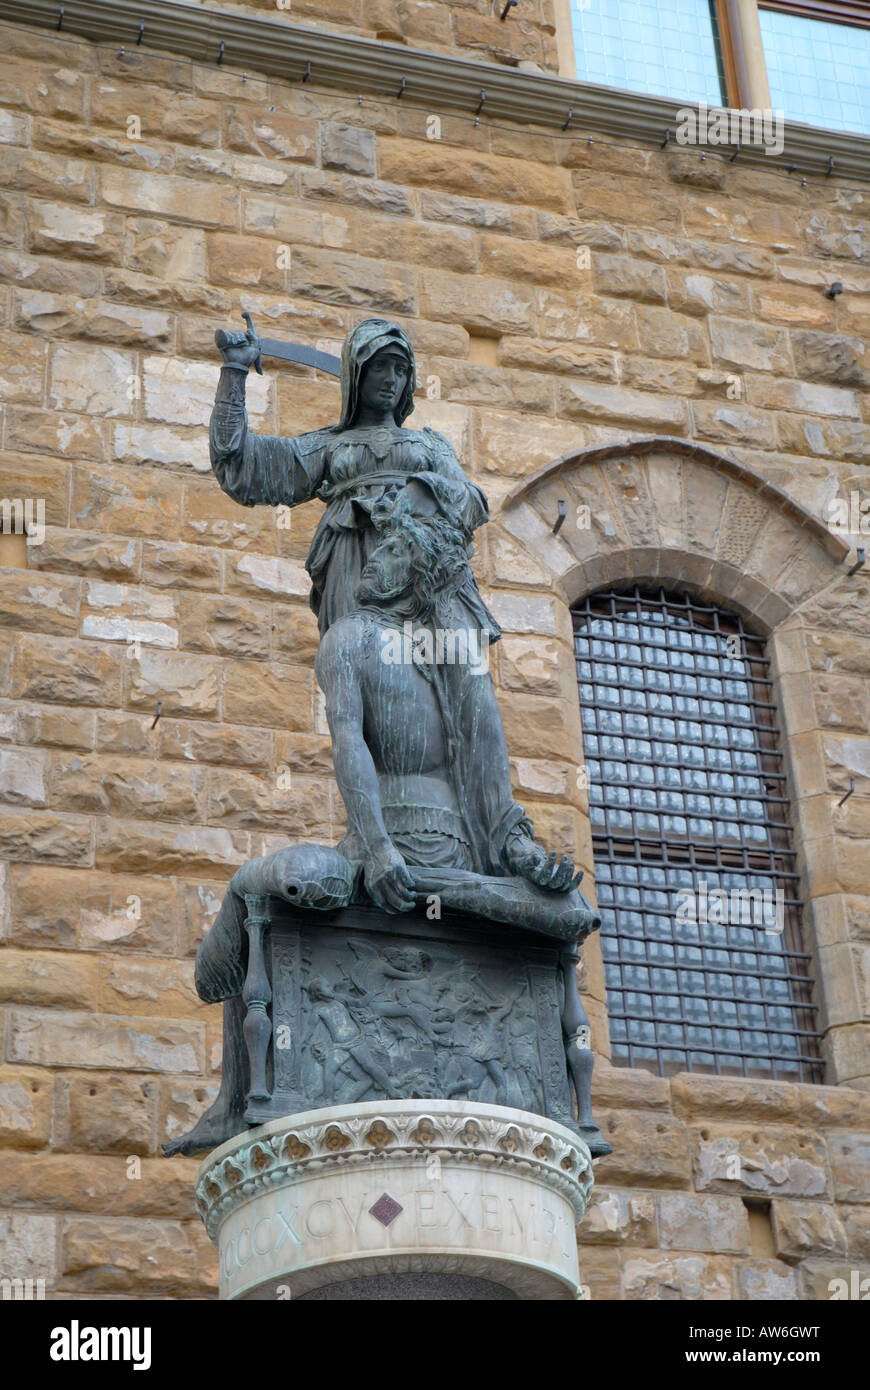 Statue of Judith and Holofernes by Donatello in Piazza della Signoria,  Florence Italy Stock Photo - Alamy